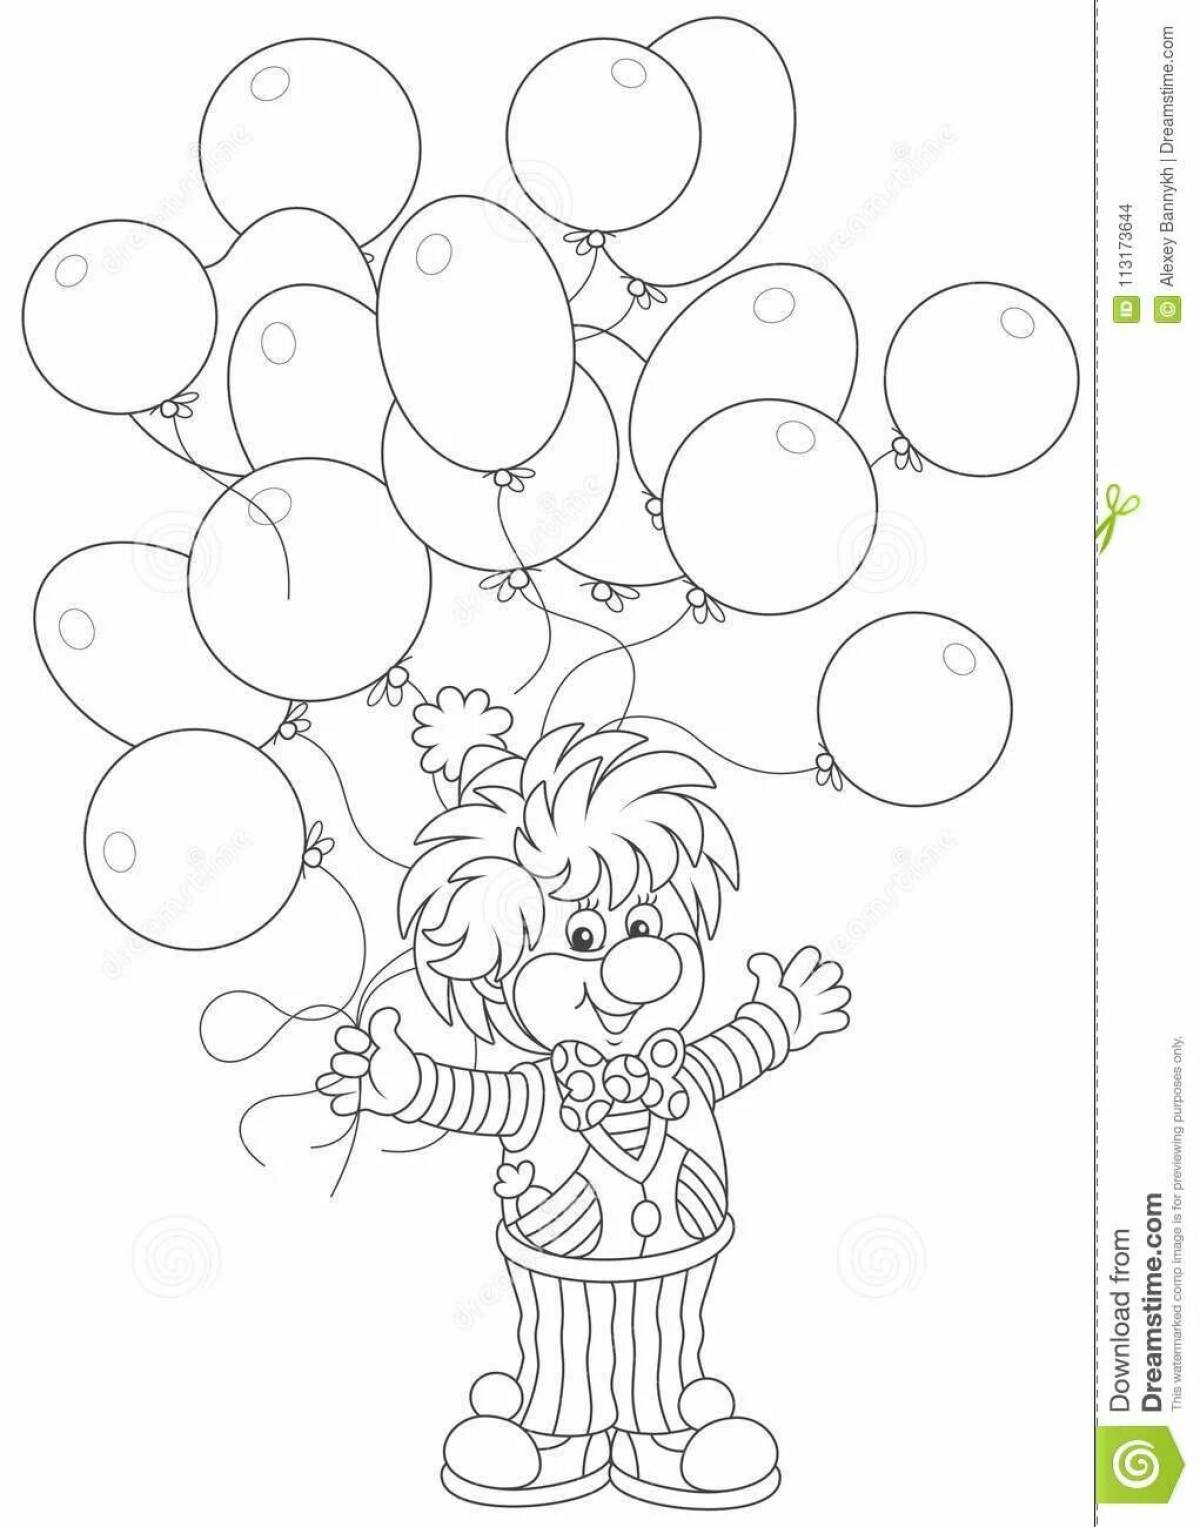 Balloon clown #6